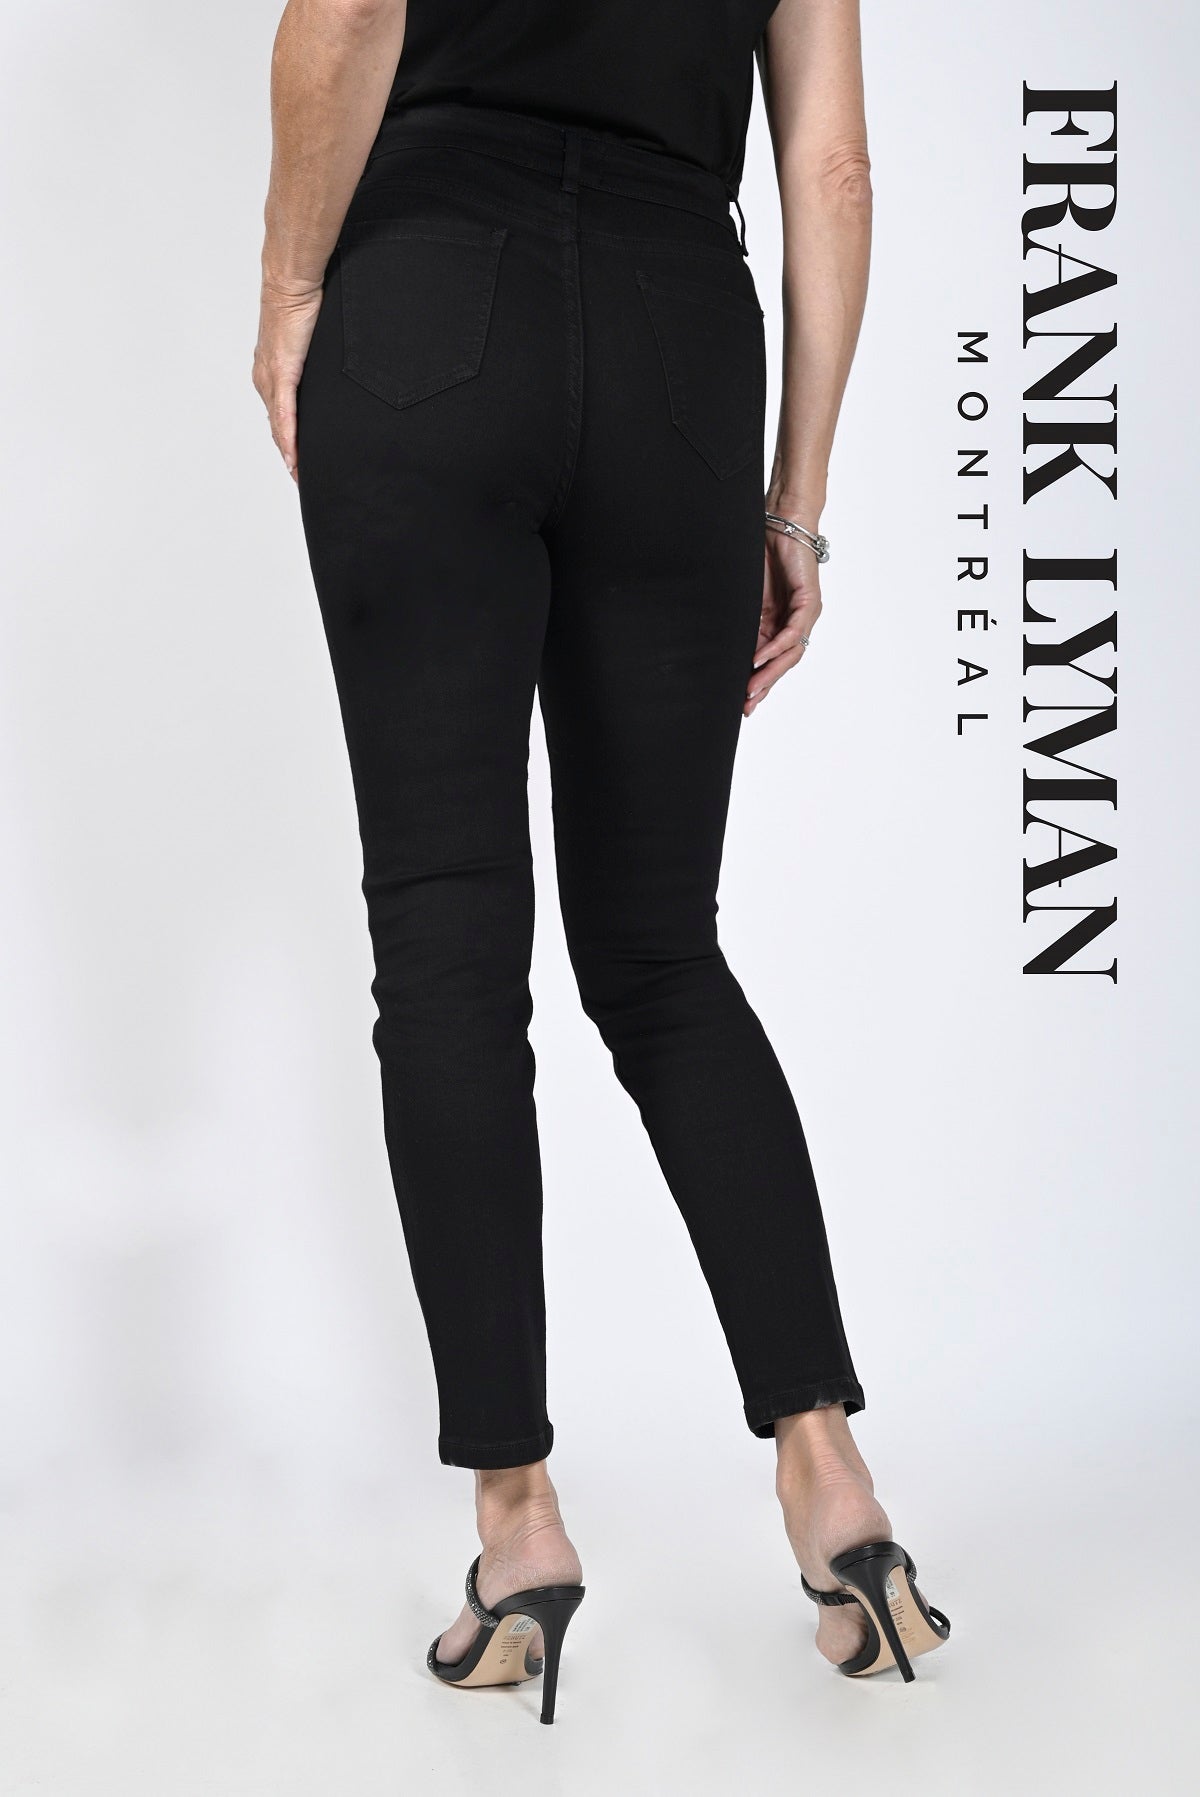 Frank Lyman Montreal Black Jeans-Buy Frank Lyman Montreal Jeans Online-Women's Jeans Online Canada-Frank Lyman Montreal Online Shop